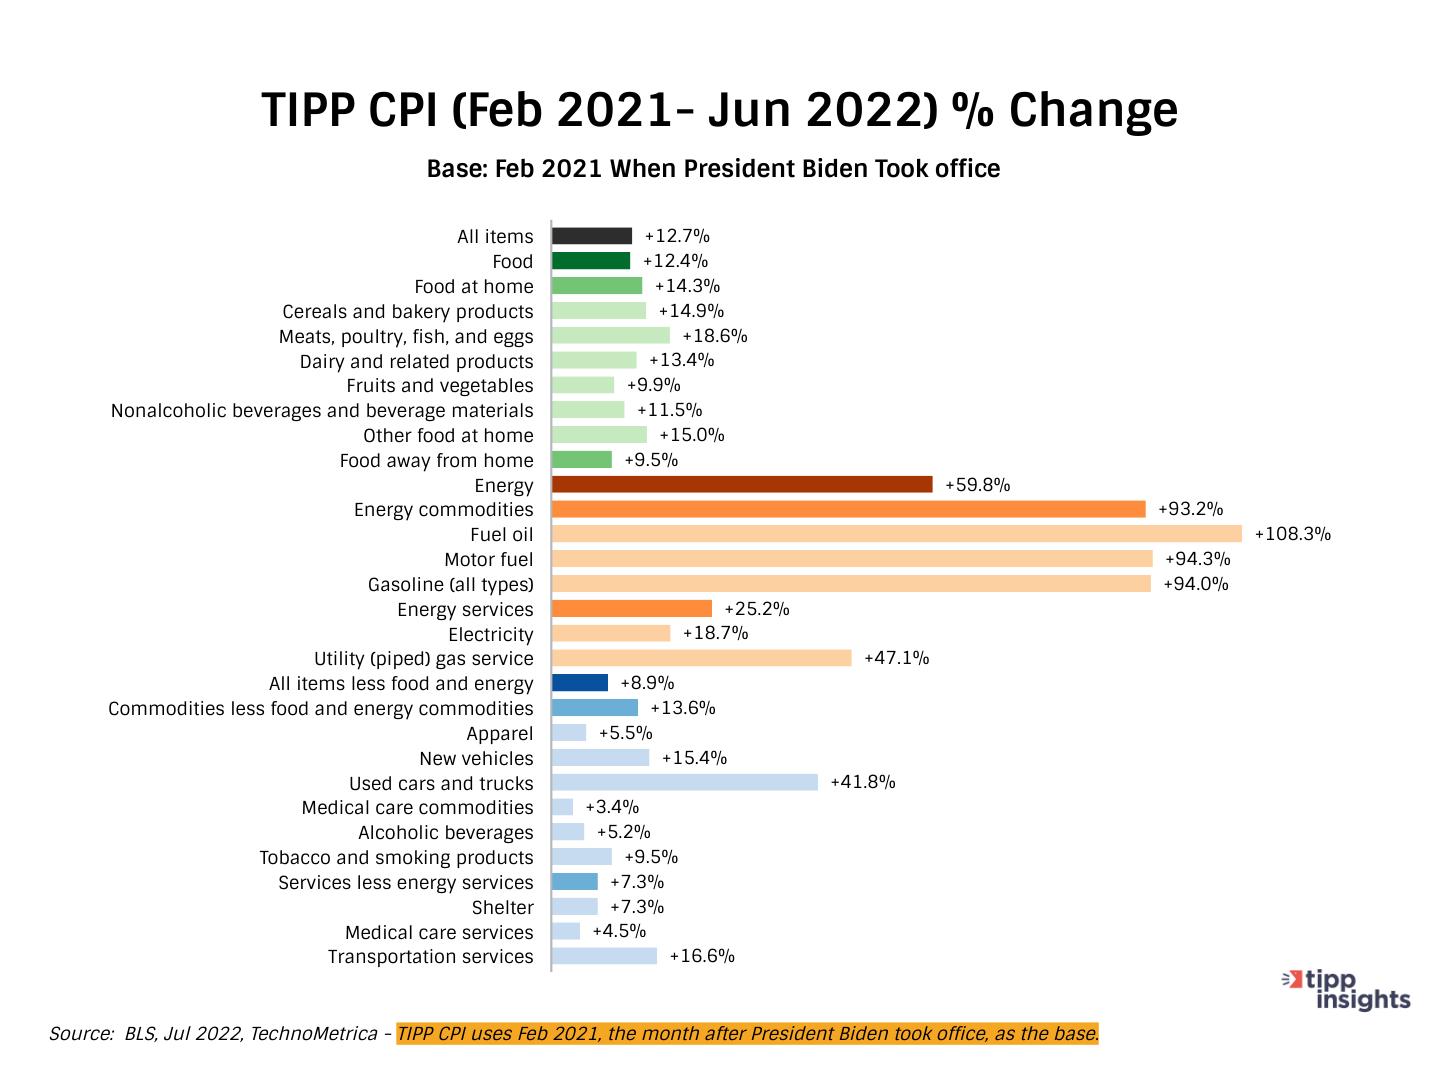 TIPP consumer price index february 2021 - june 2022 % change